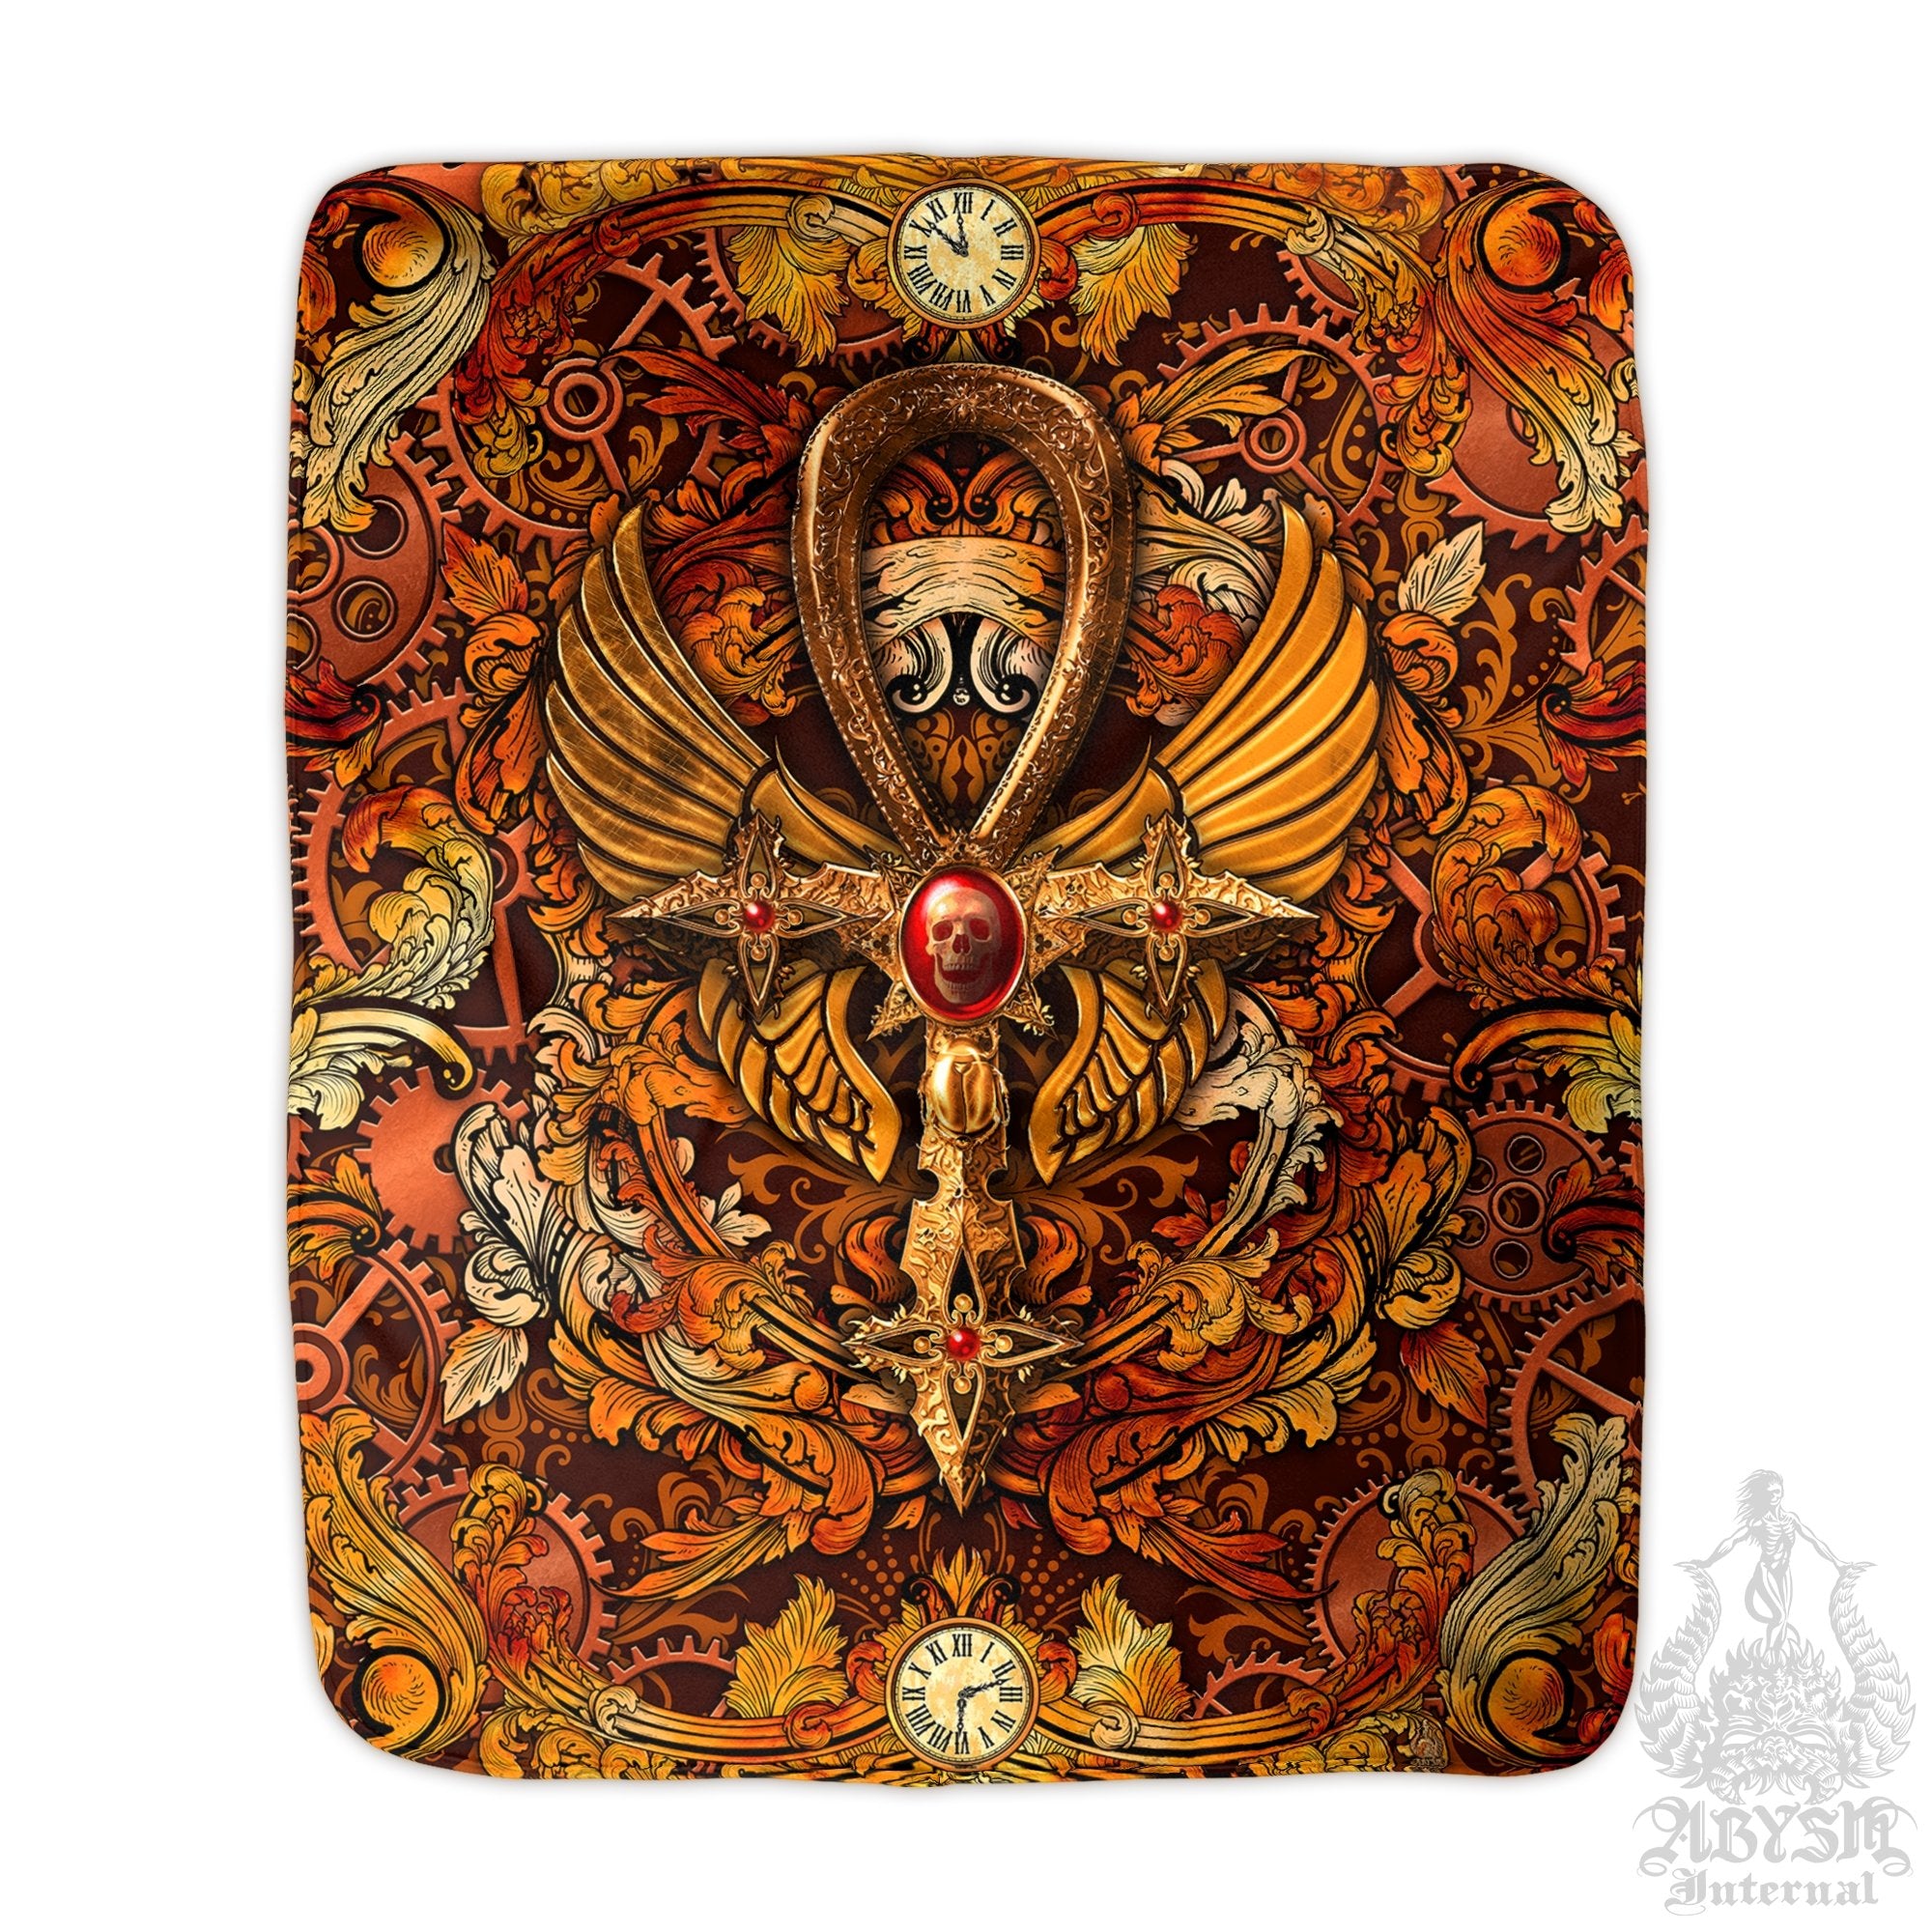 Steampunk Throw Fleece Blanket, Occult Home Decor - Bronze Ankh Cross - Abysm Internal